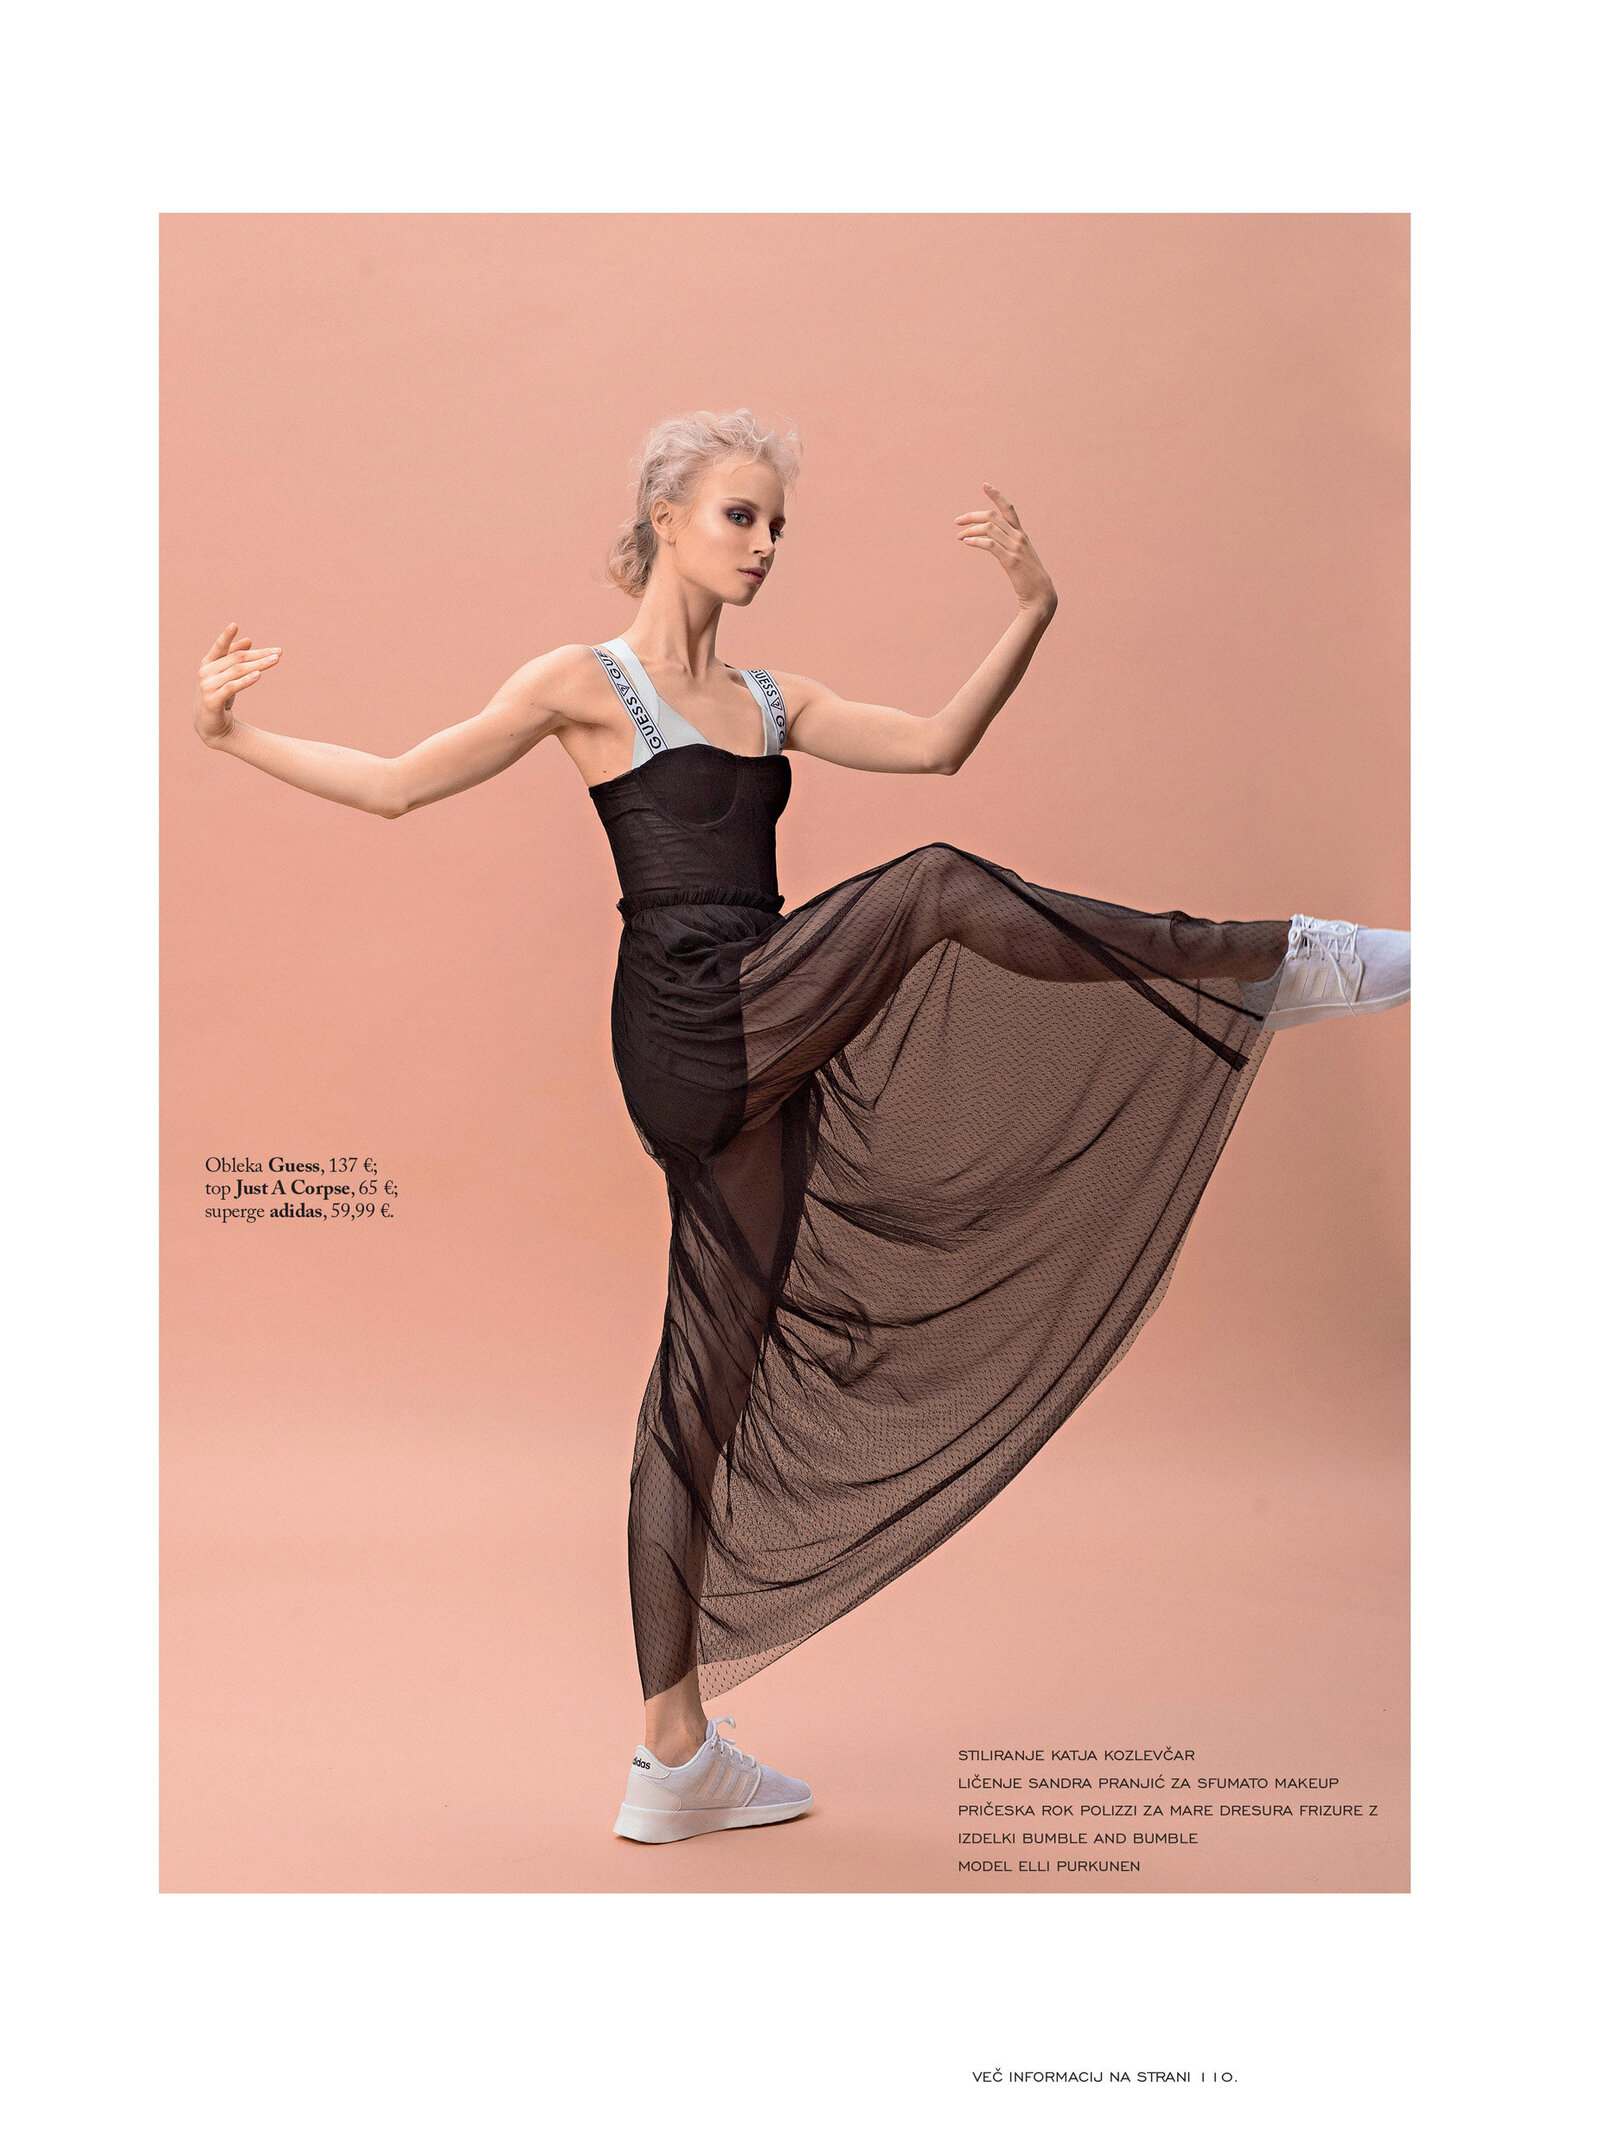 ELLE-fashion-editorial-ballet-dancer-7